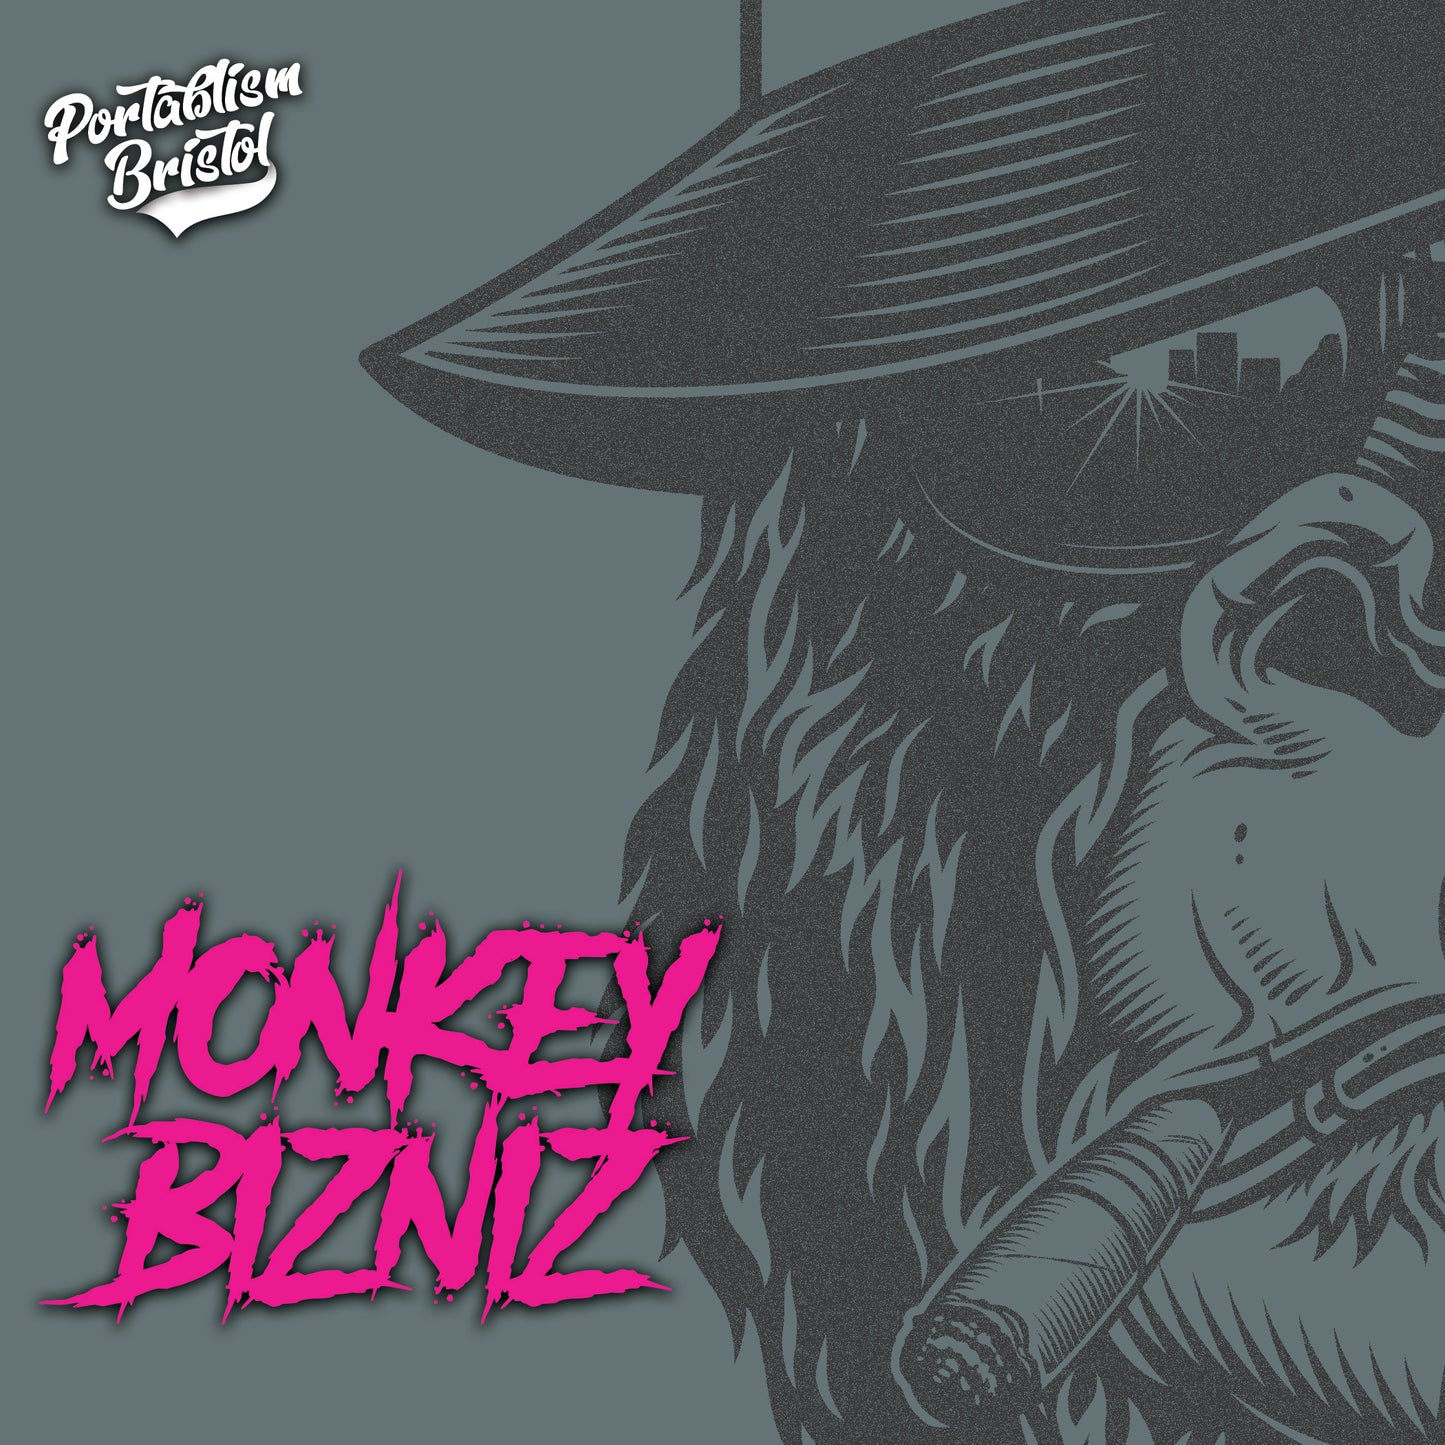 Portablism Bristol presents Monkey Bizniz 7" Scratch Tool